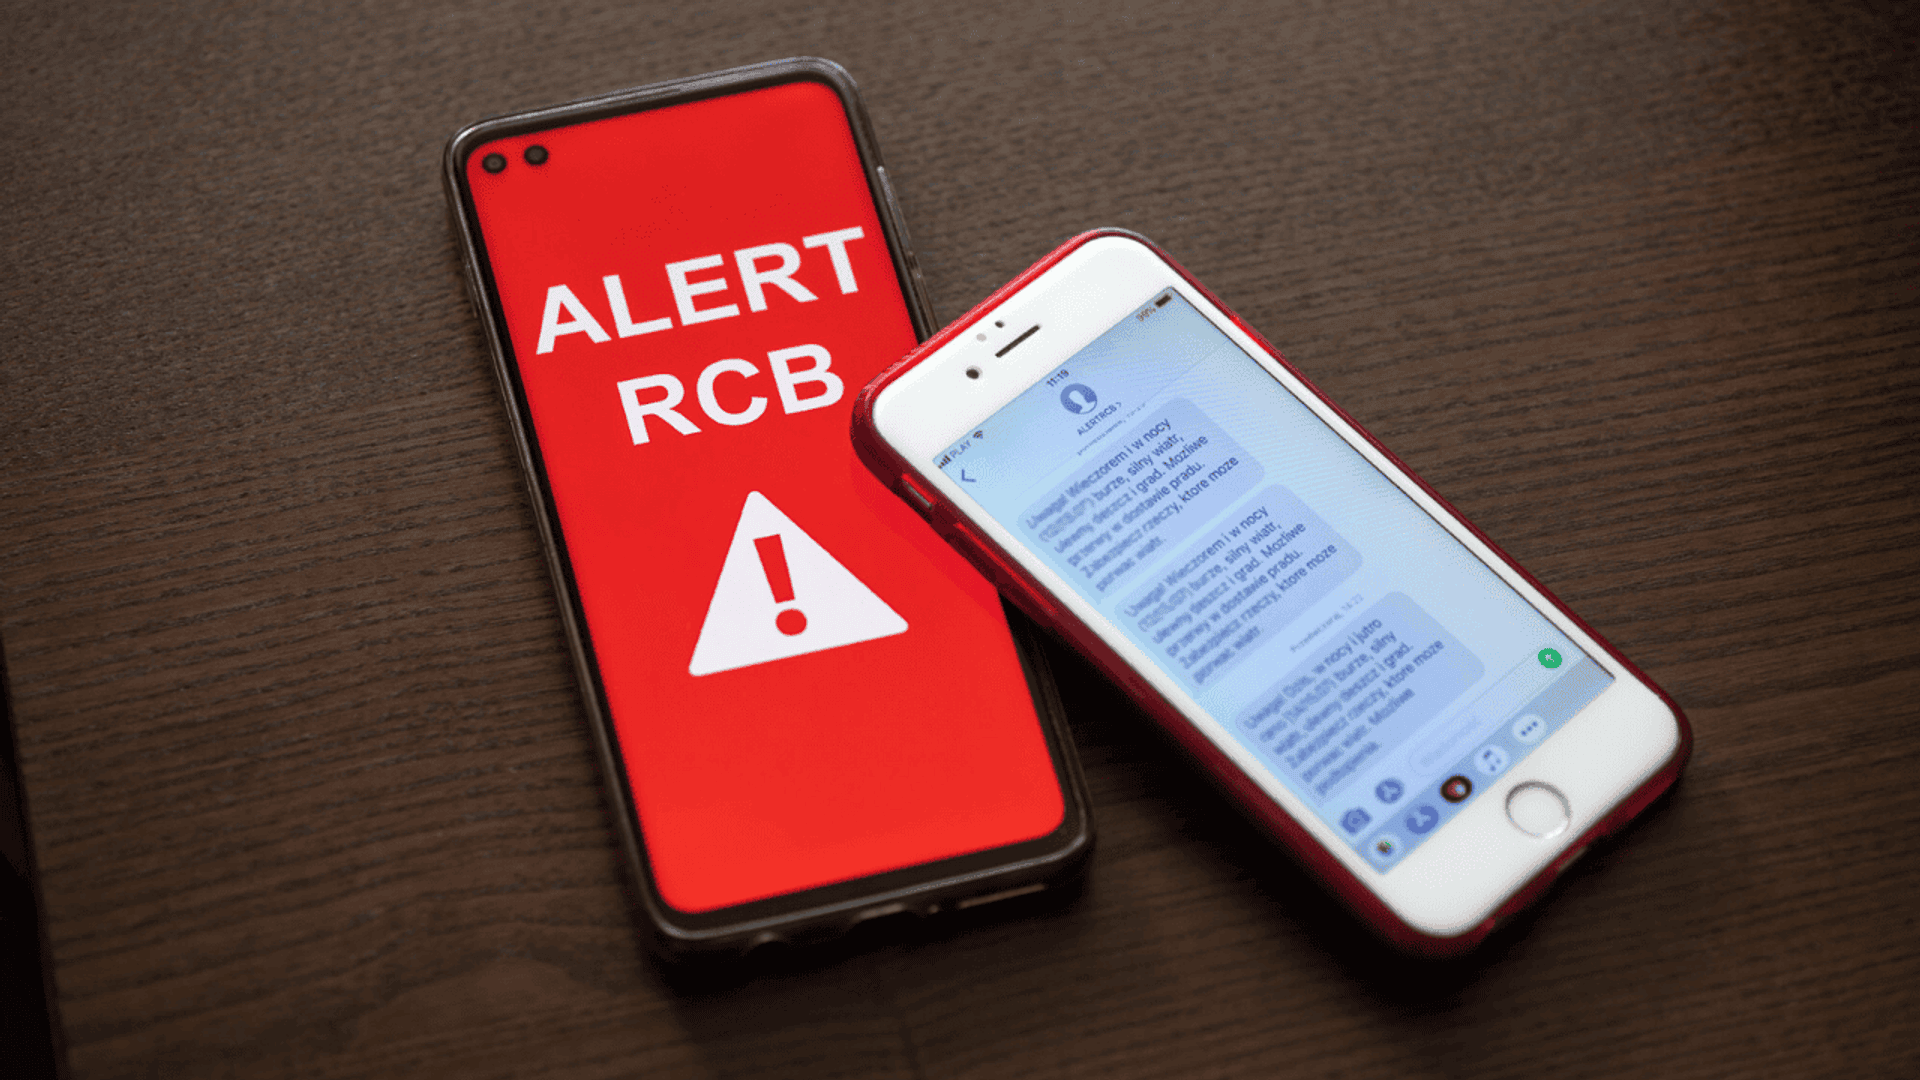 alert RCB